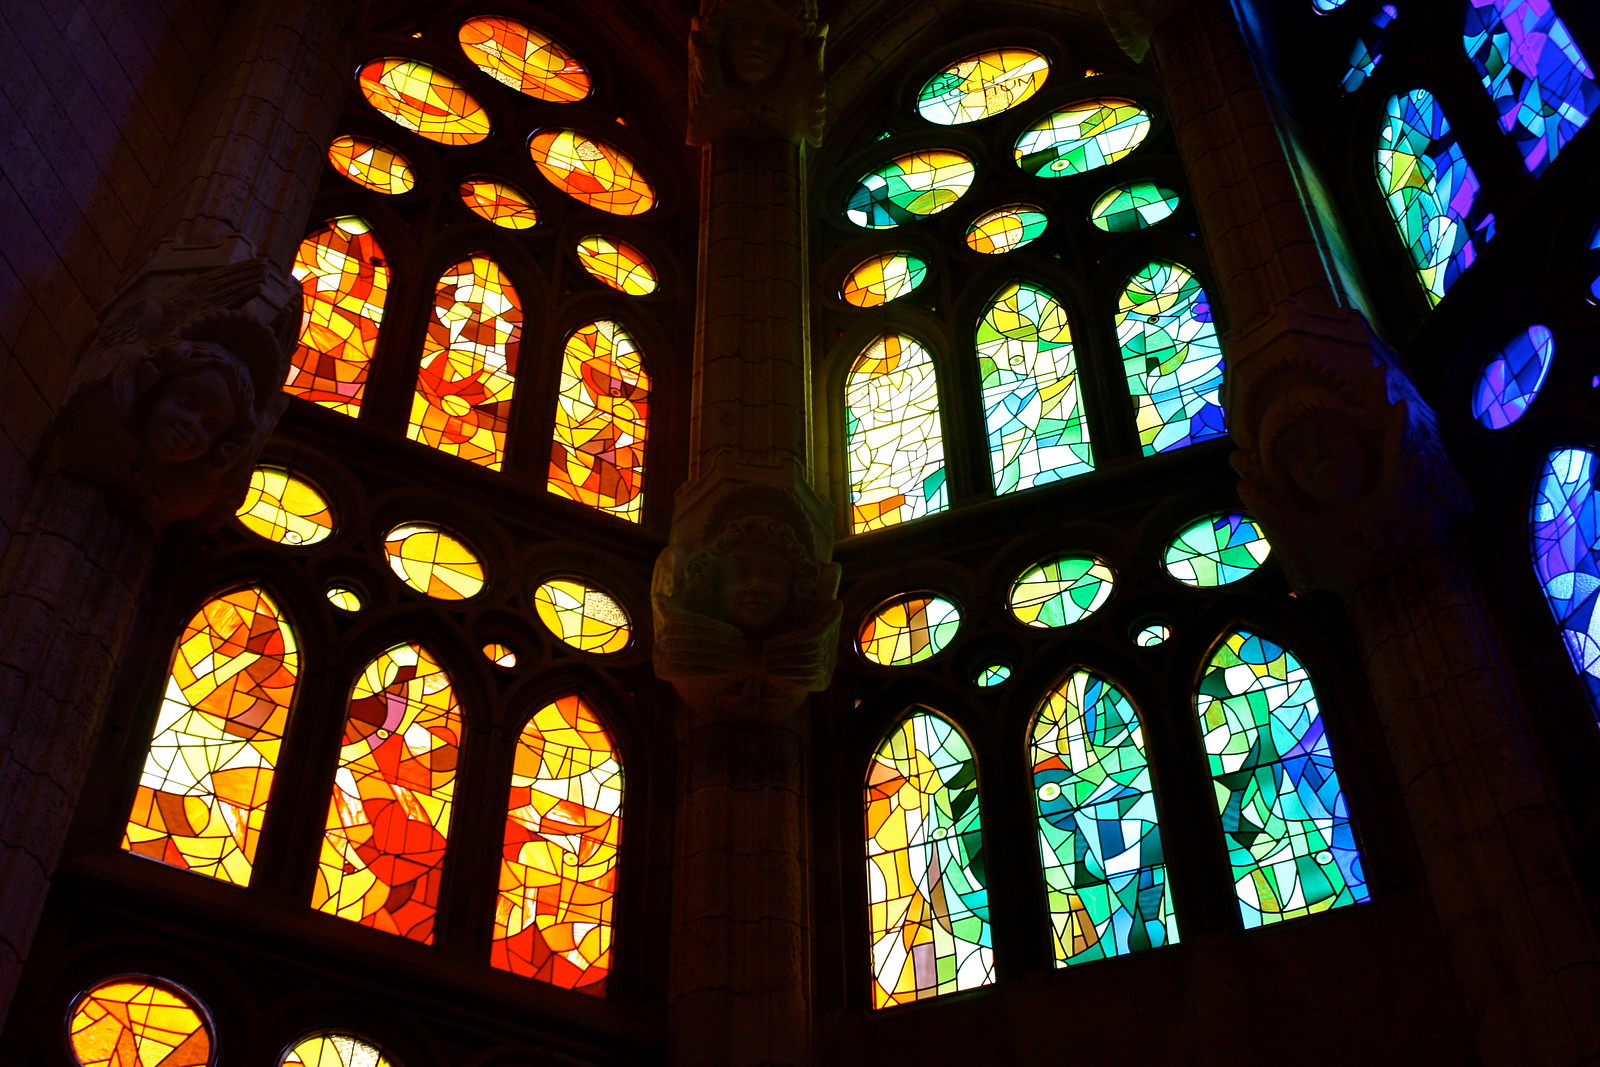 Sagrada Família by Antoni Gaudí in Barcelona, Spain